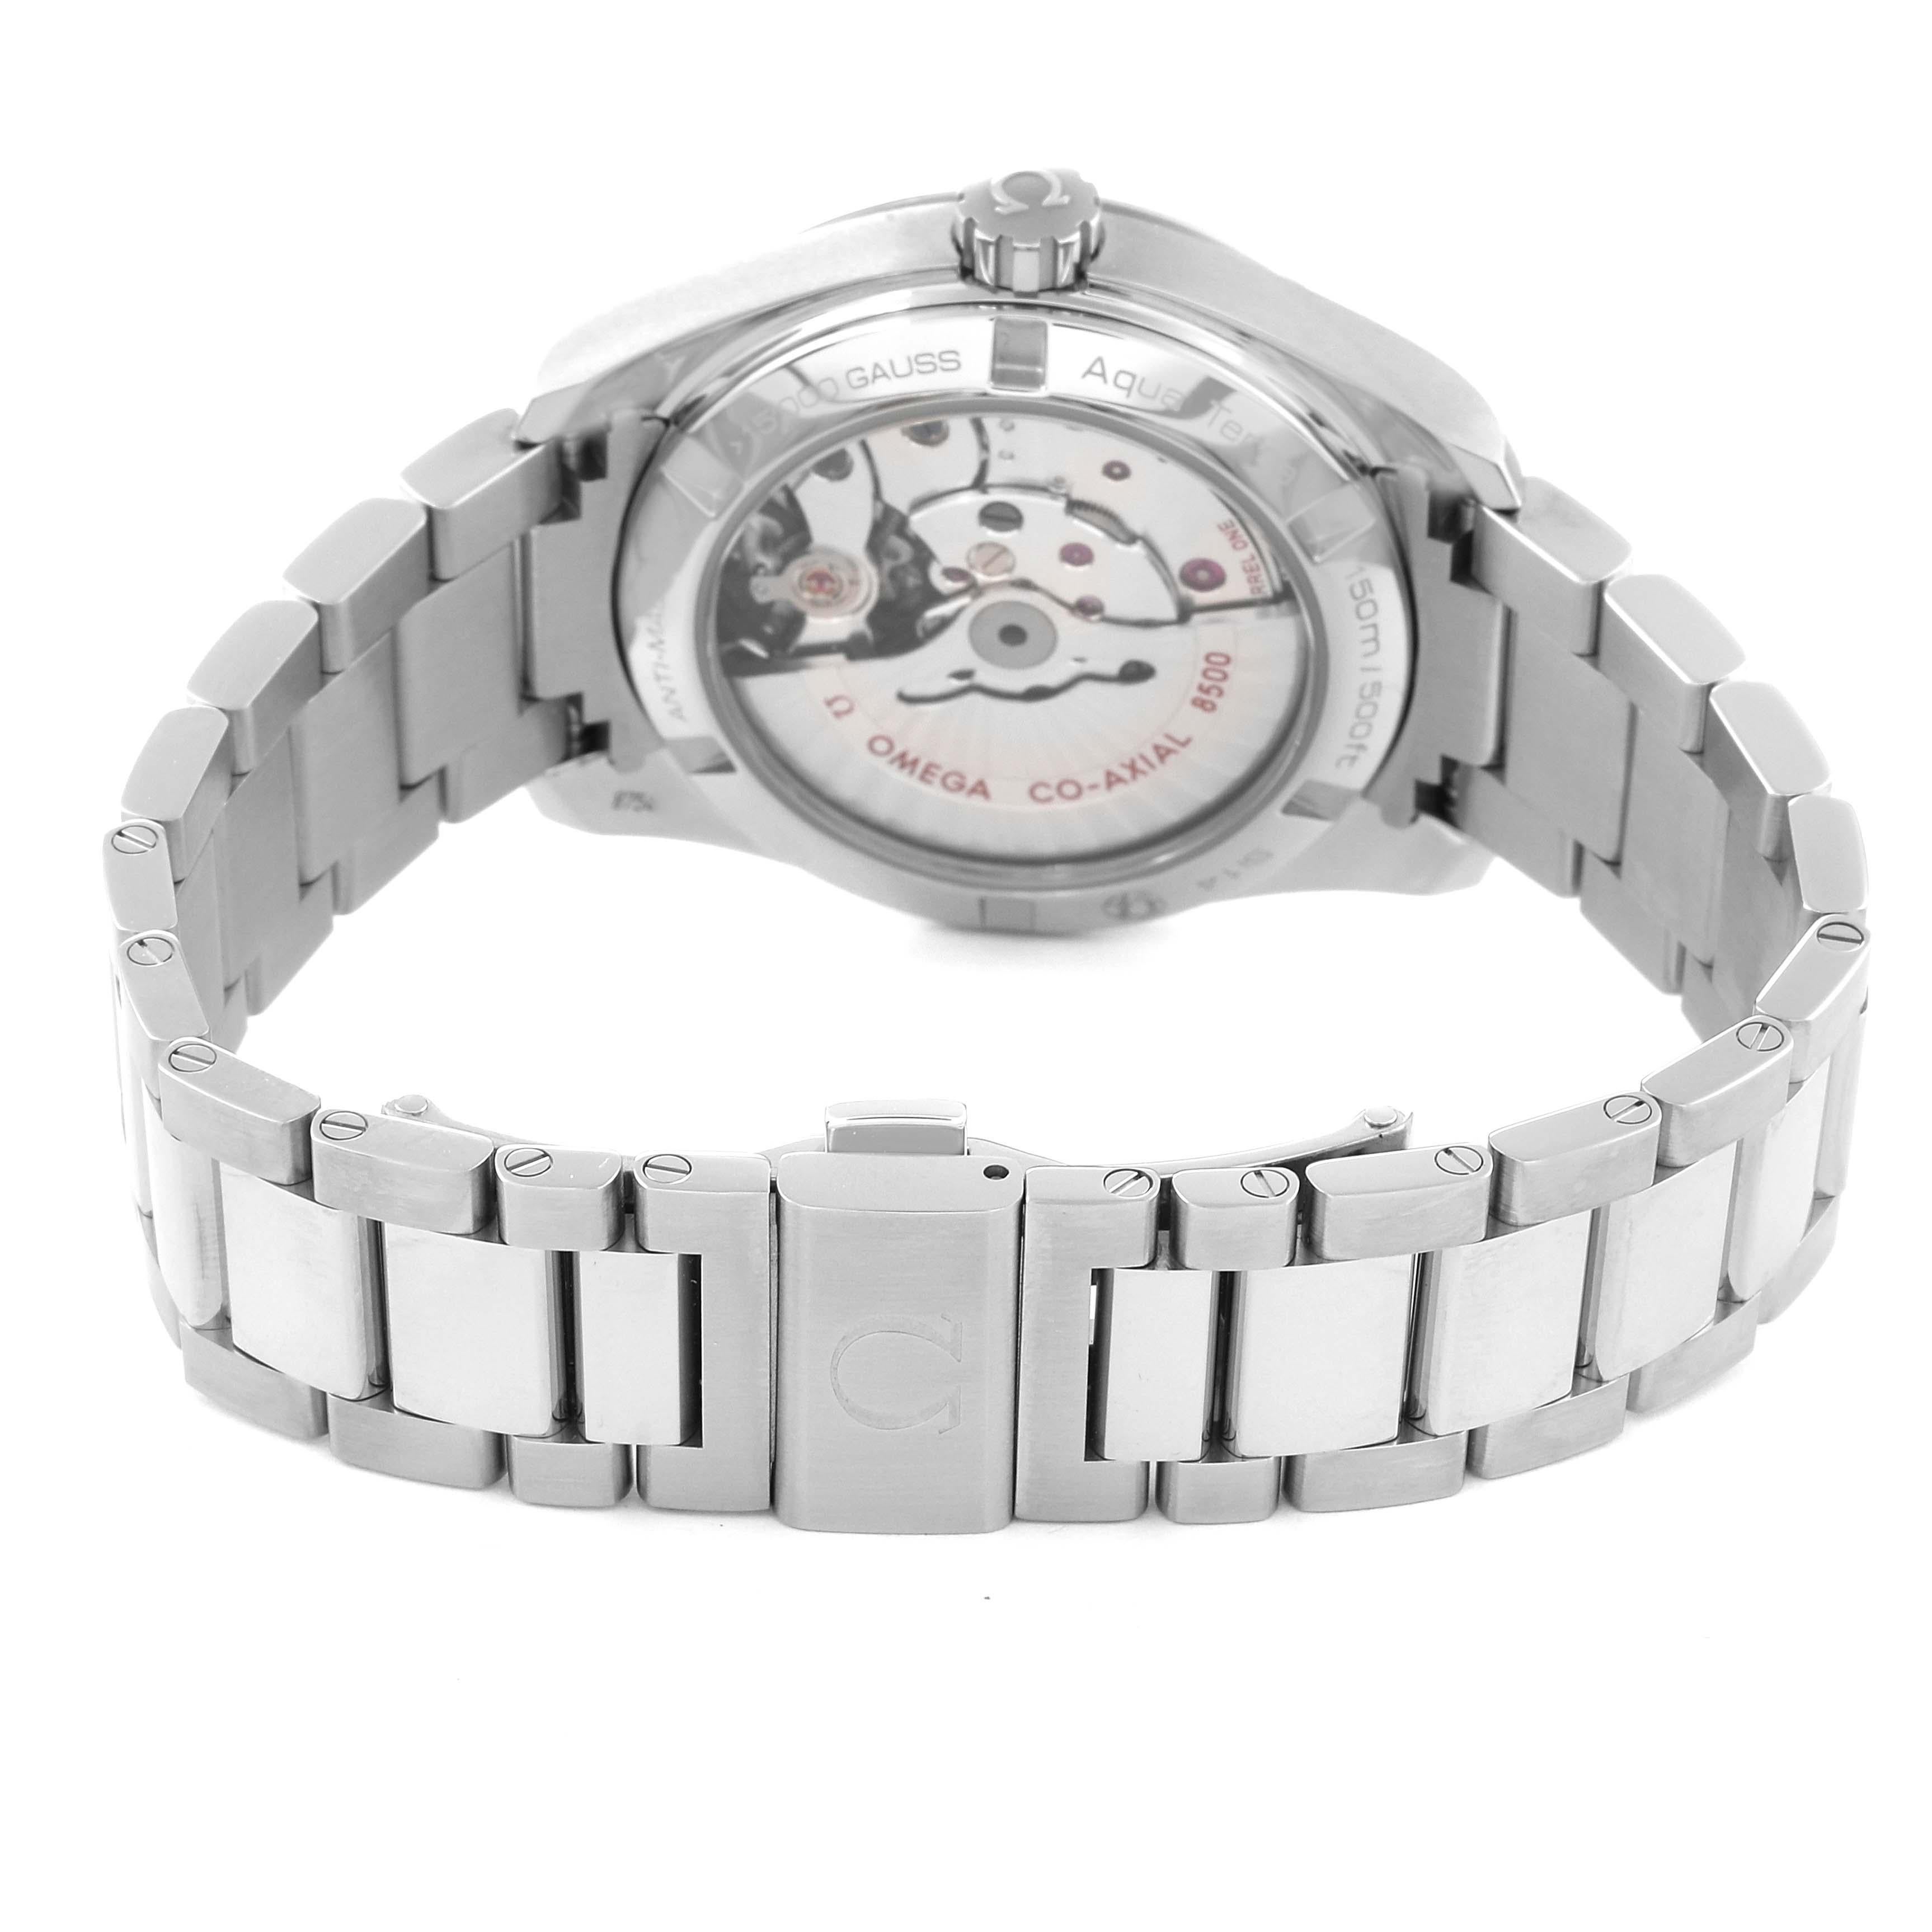 Omega Aqua Terra Mother Of Pearl Dial Diamond Steel Watch 231.15.39.21.55.001 4